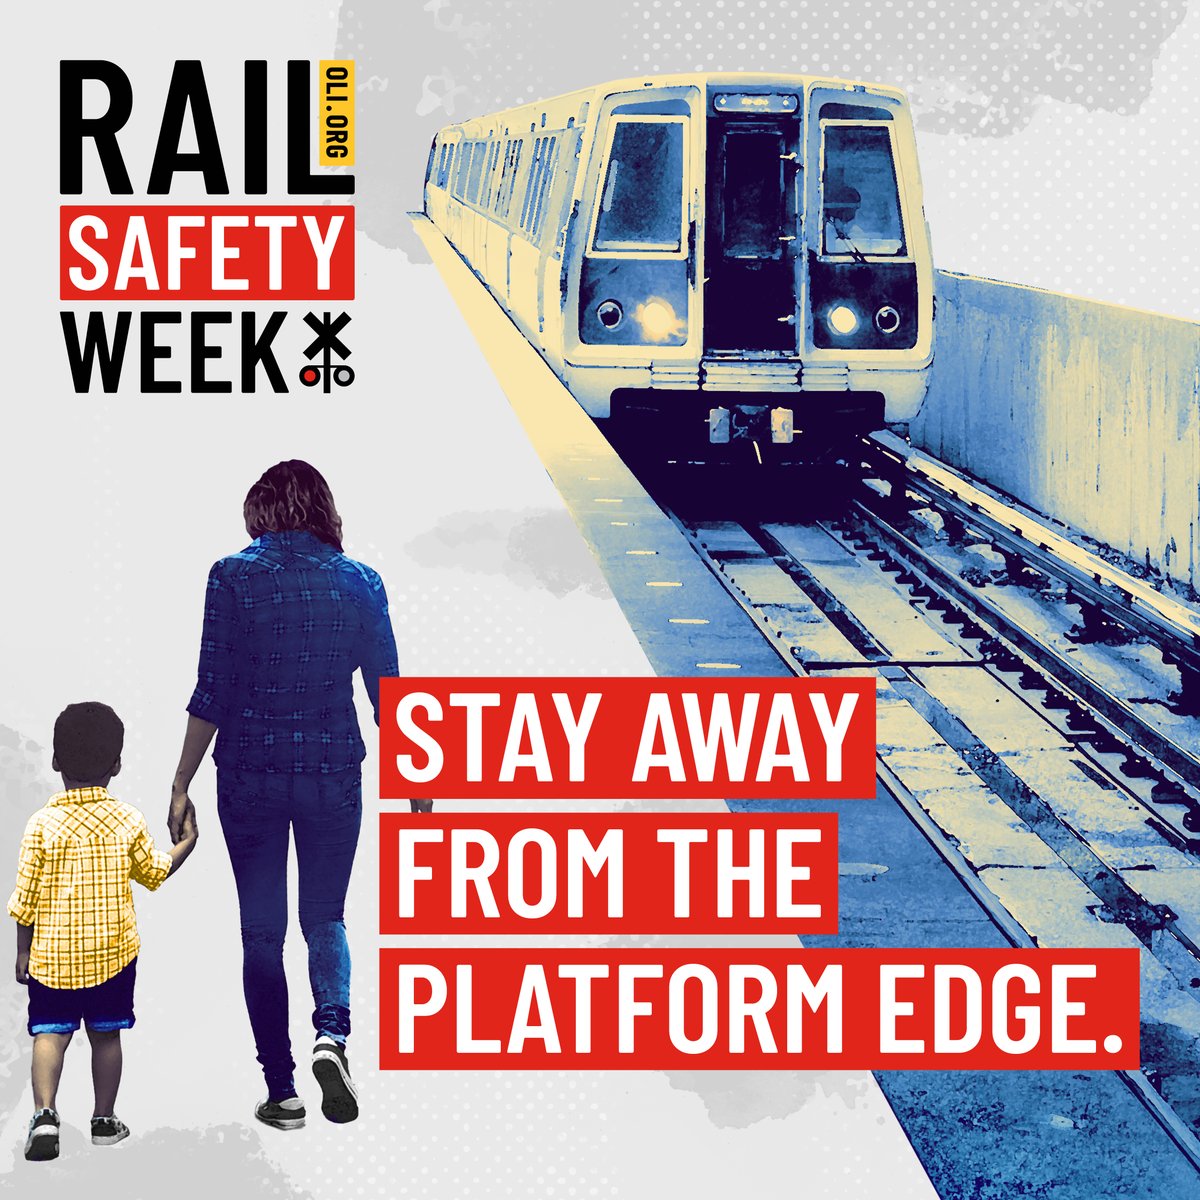 Always stay alert when using rail #transit systems. #SeeTracksThinkTrain #RailSafetyWeek #STOPTrackTragedies @olinational